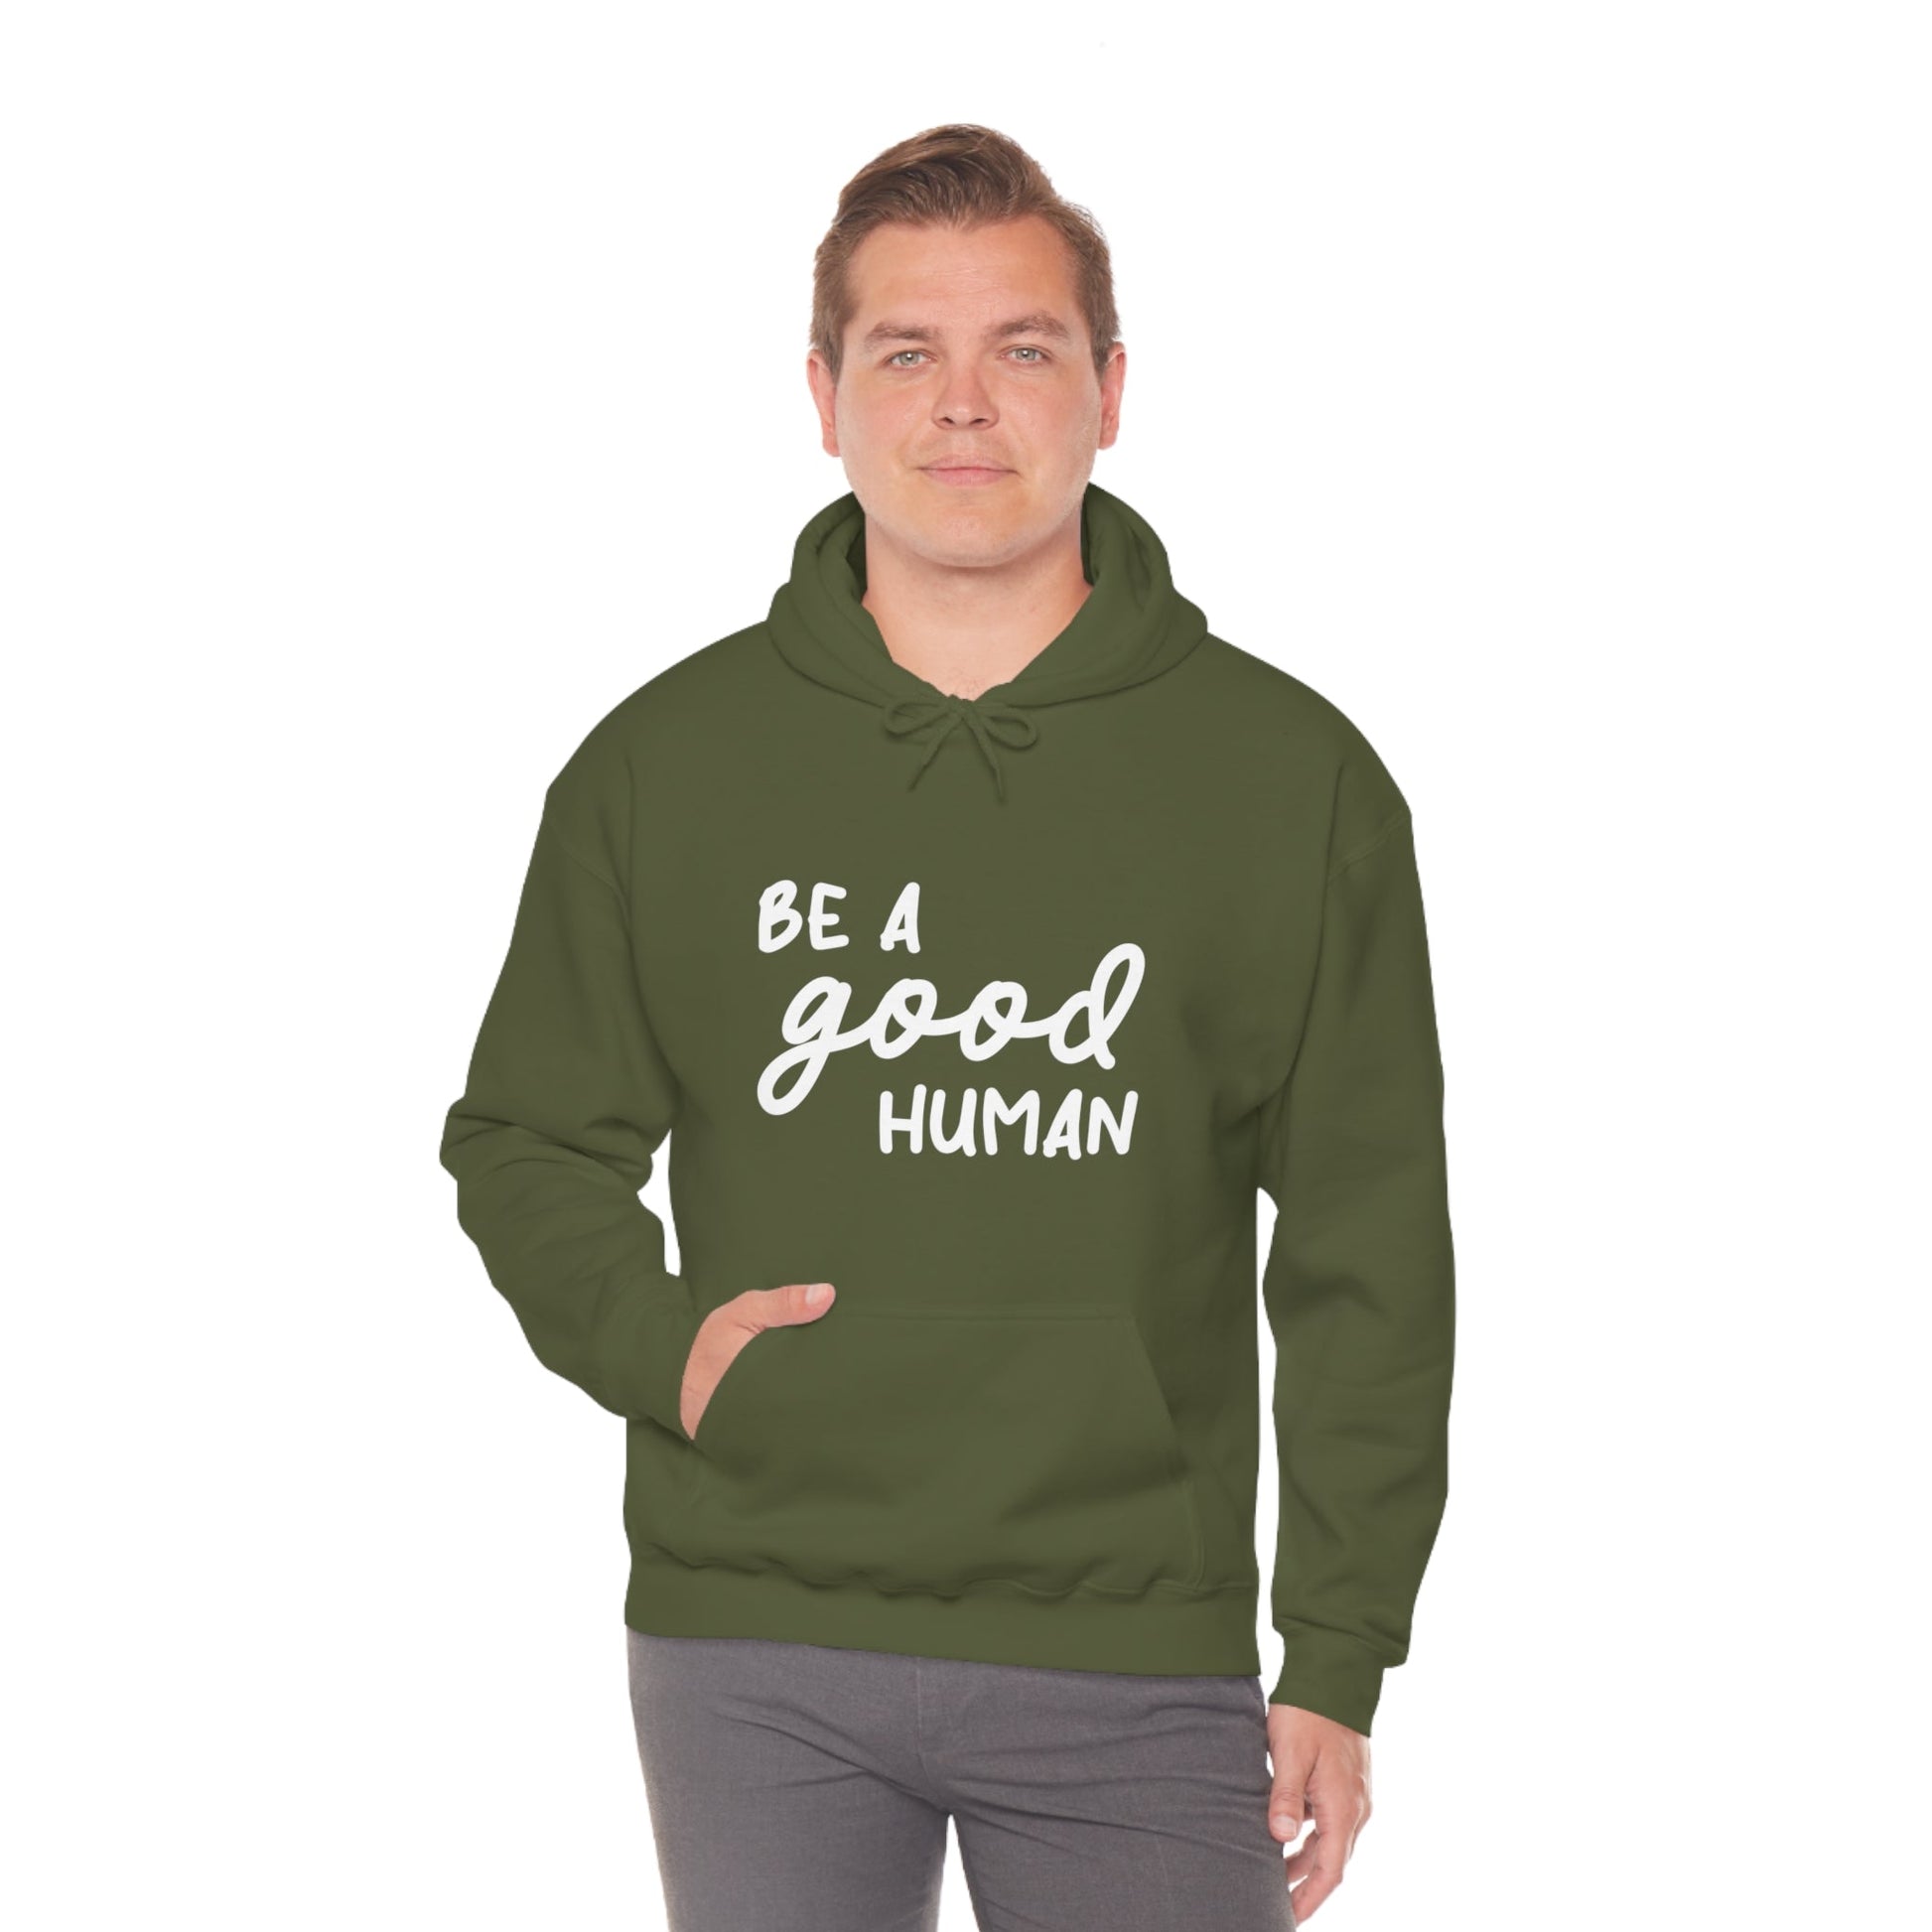 Be A Good Human | Hooded Sweatshirt - Detezi Designs-84269123984495819391